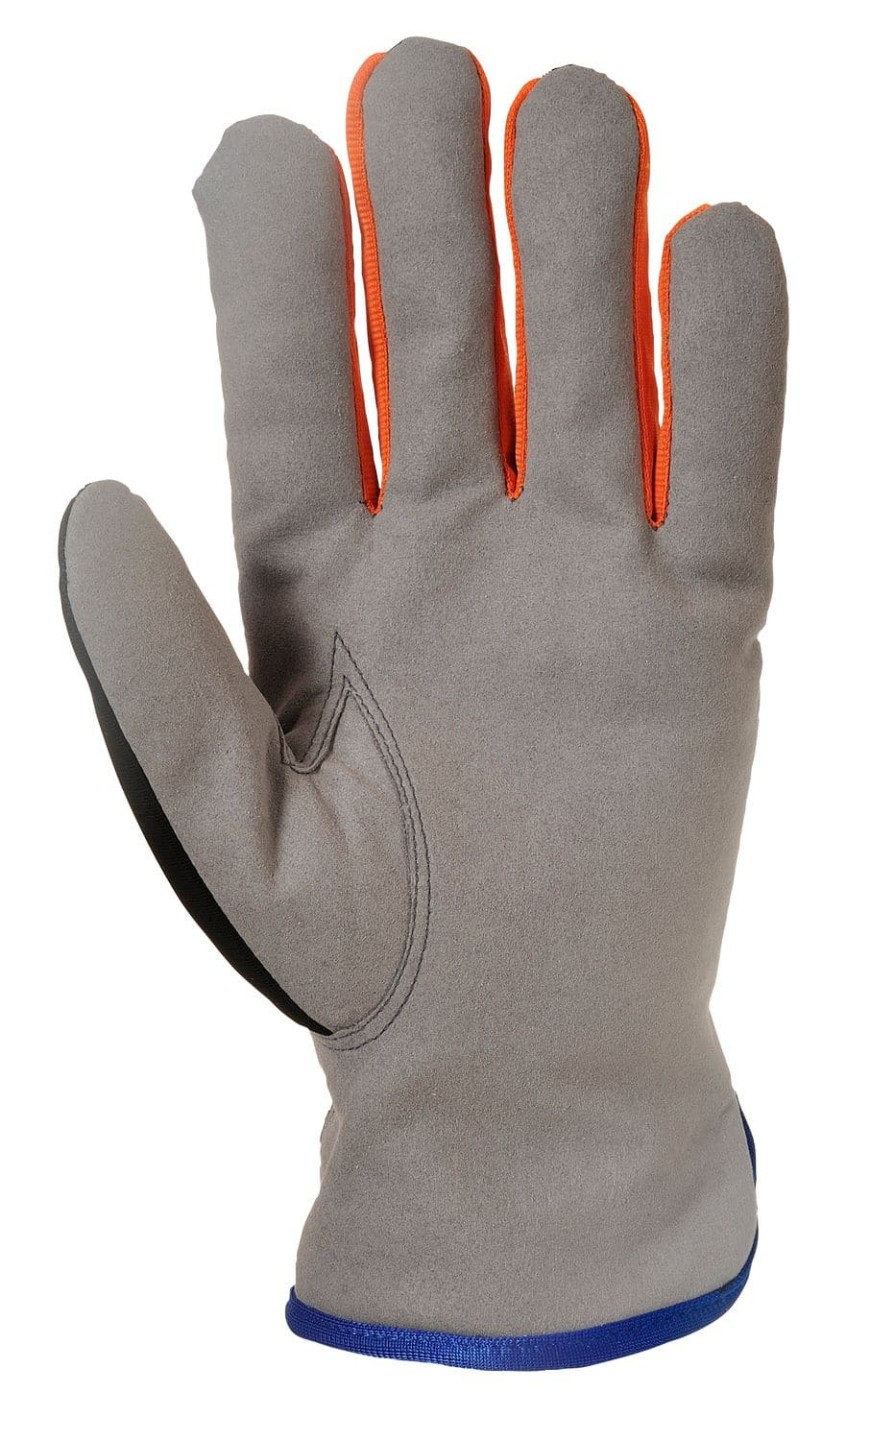 Portwest Wintershield Glove